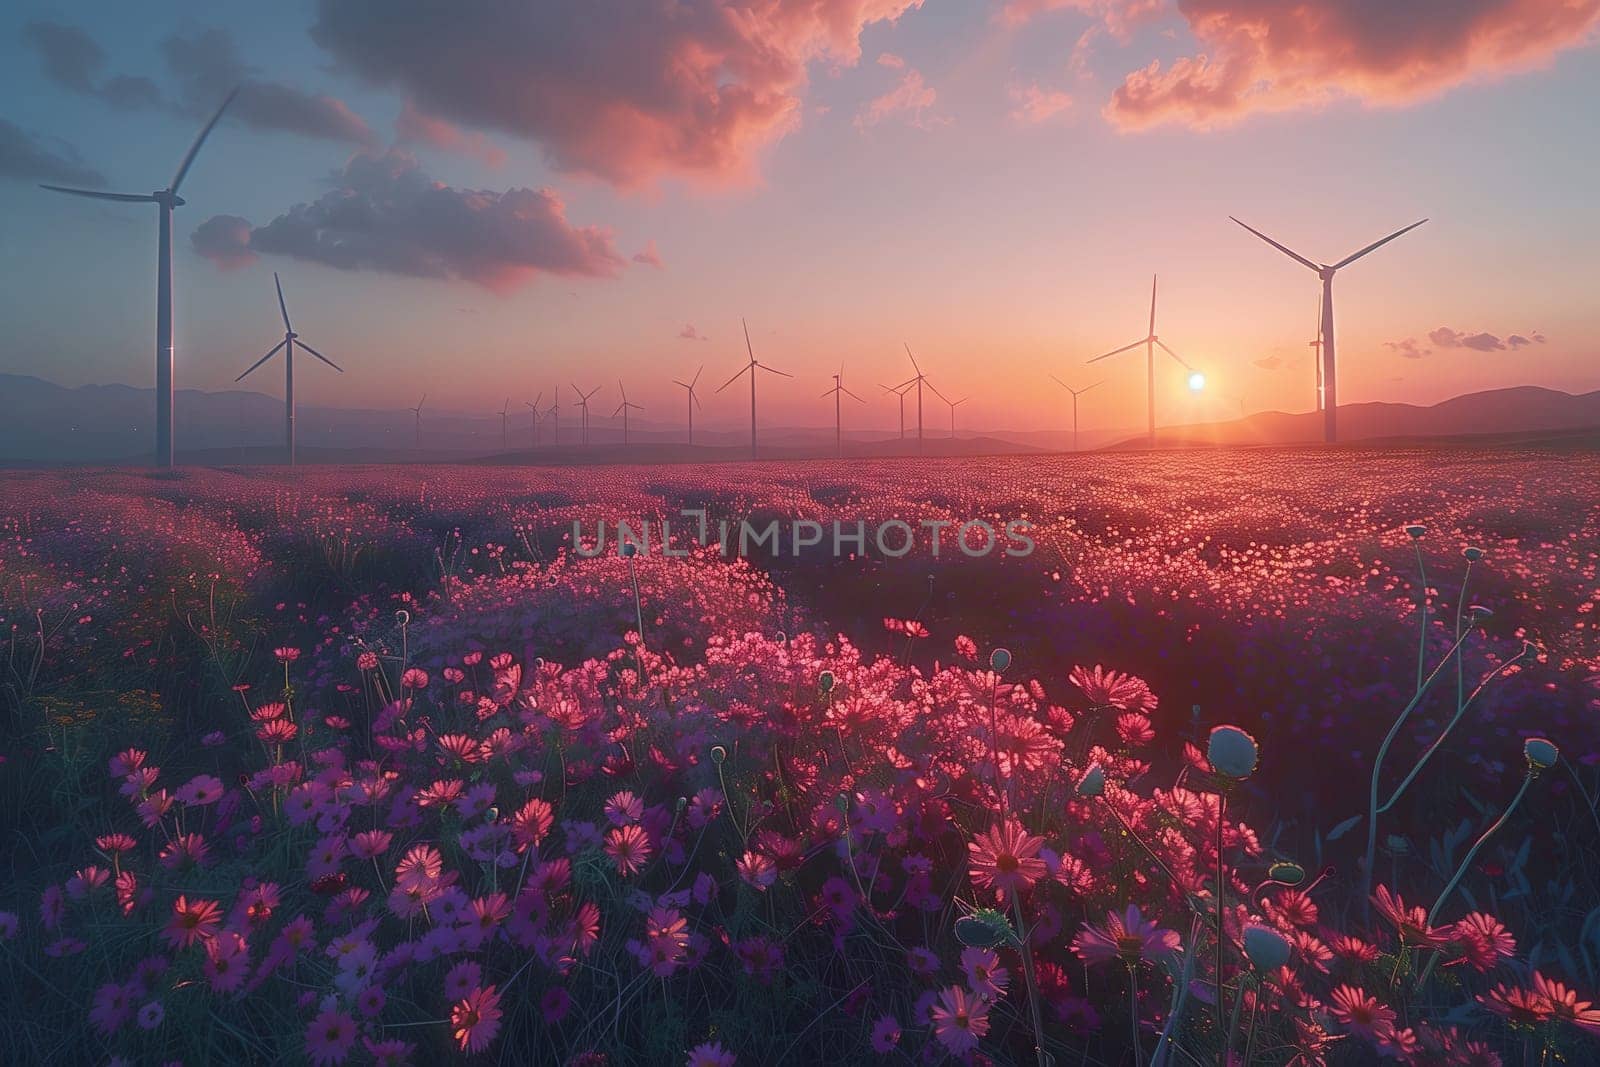 Purple flowers in field, windmills against sunset sky by richwolf